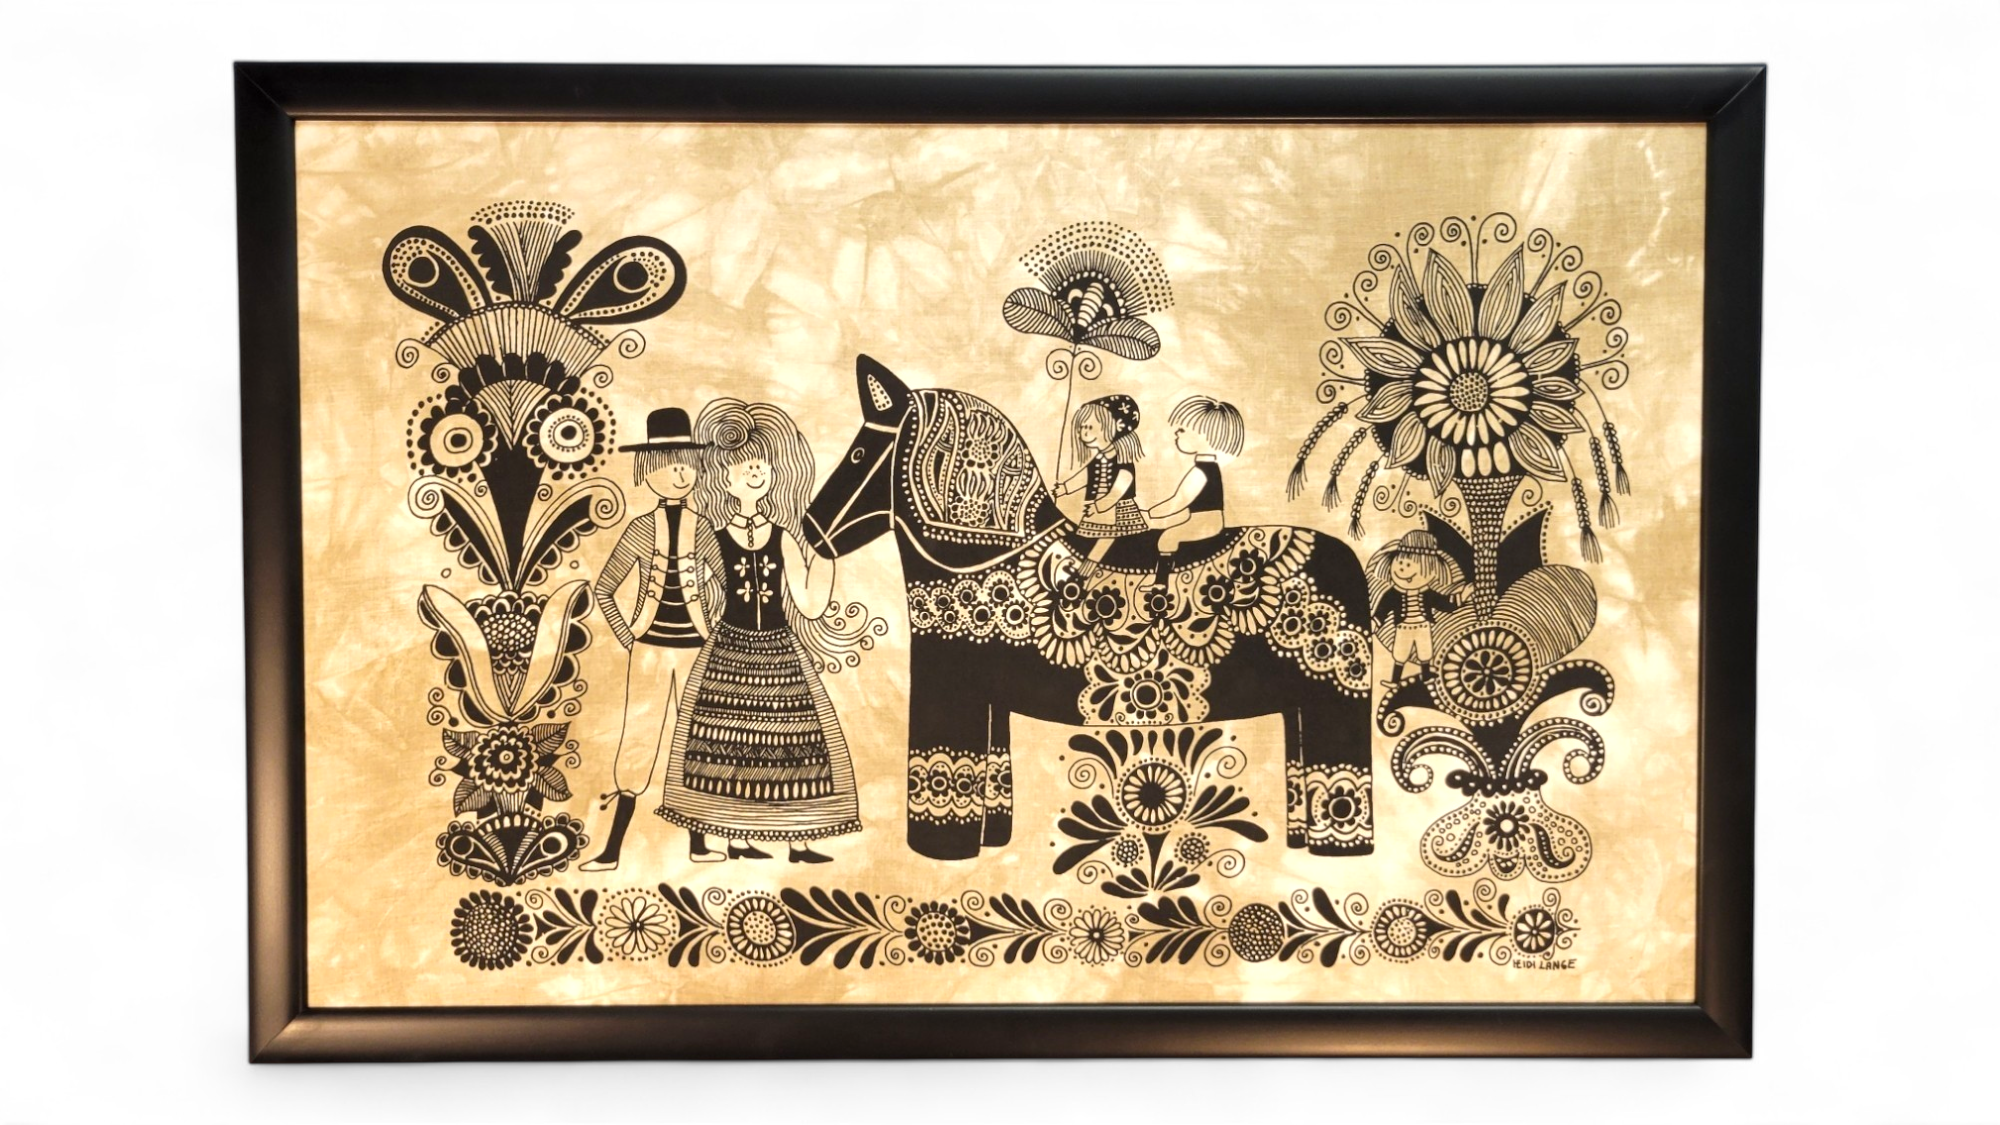 Artwork: "Dala Horse & Family" (27.5"x19")